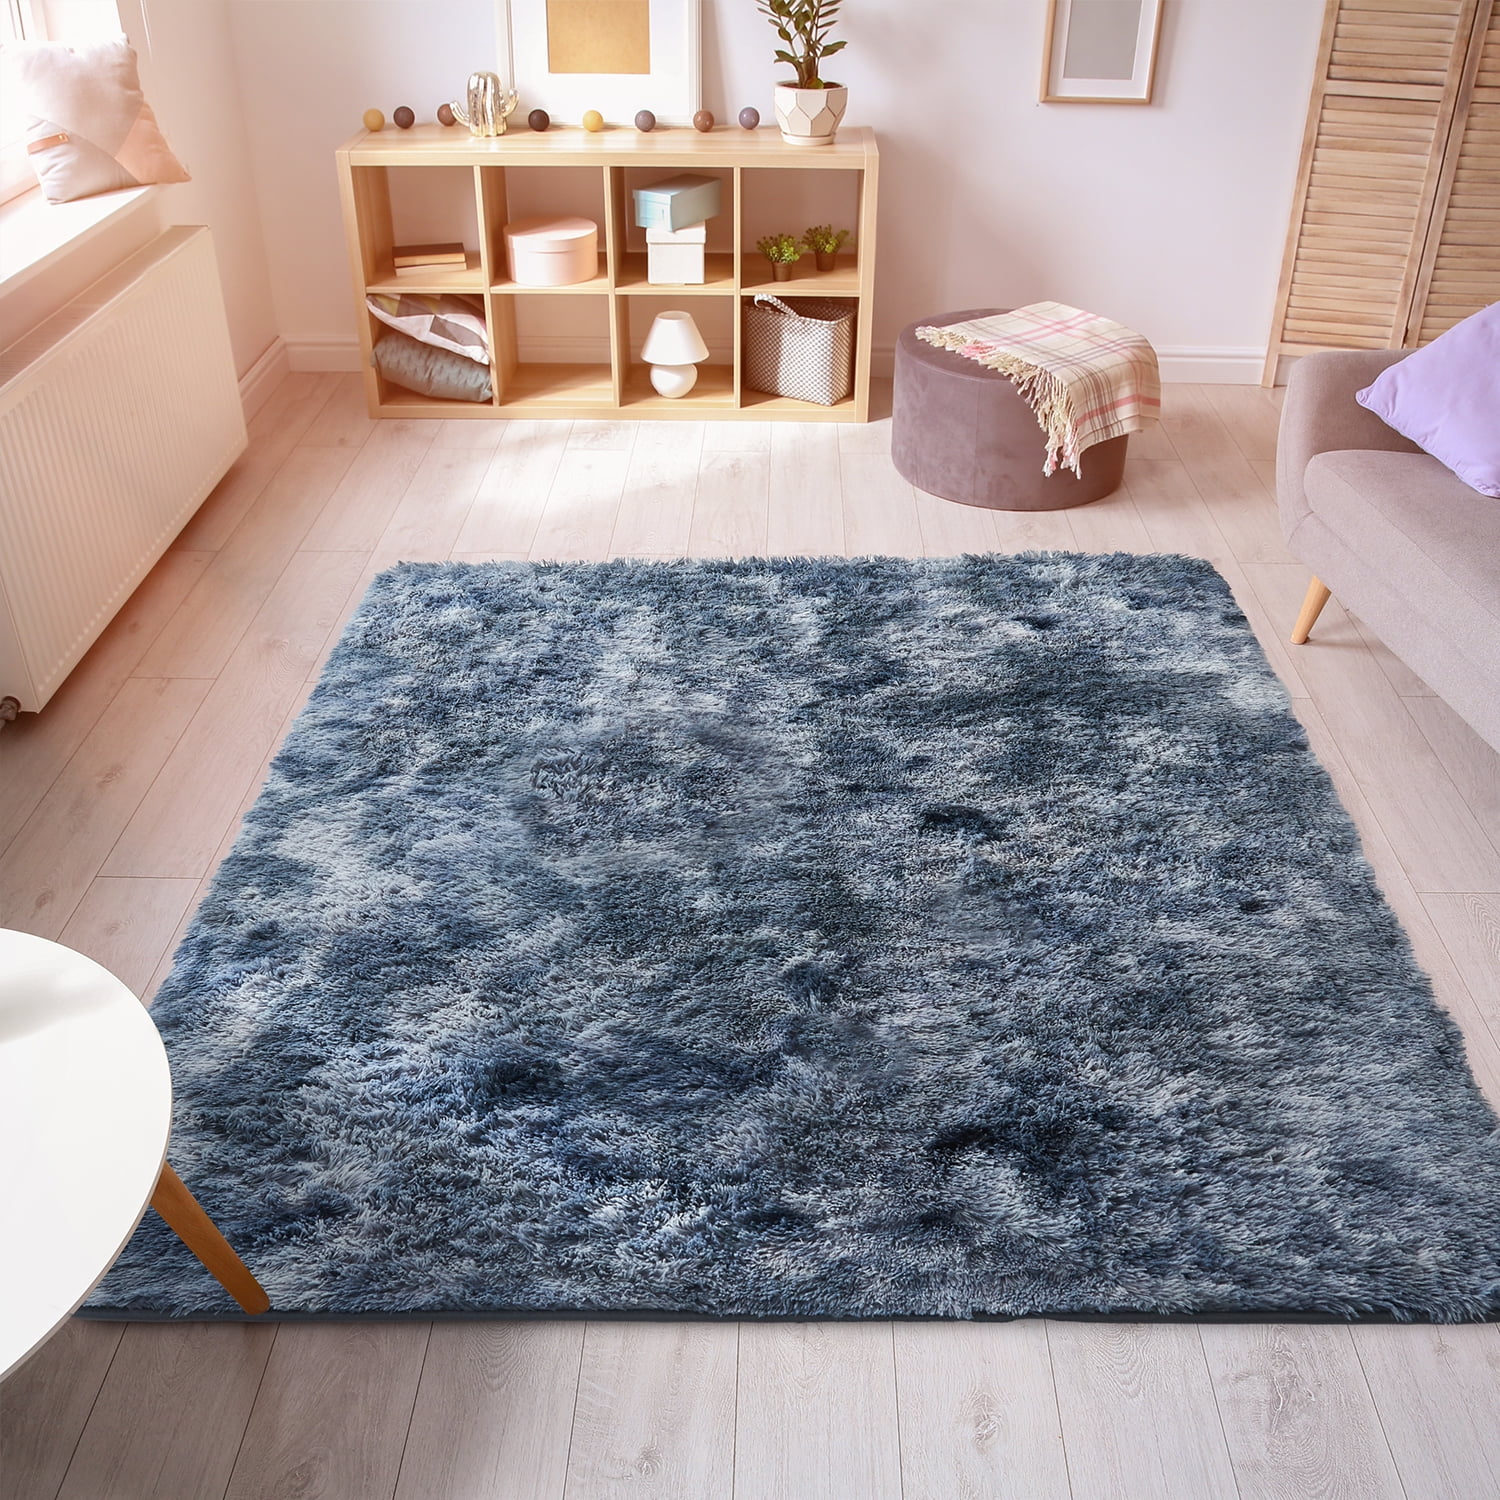 Premium Faux Sheepskin Fur Area Rugs 3'x5' Soft Luxurious Bed Side Plush Carpets 